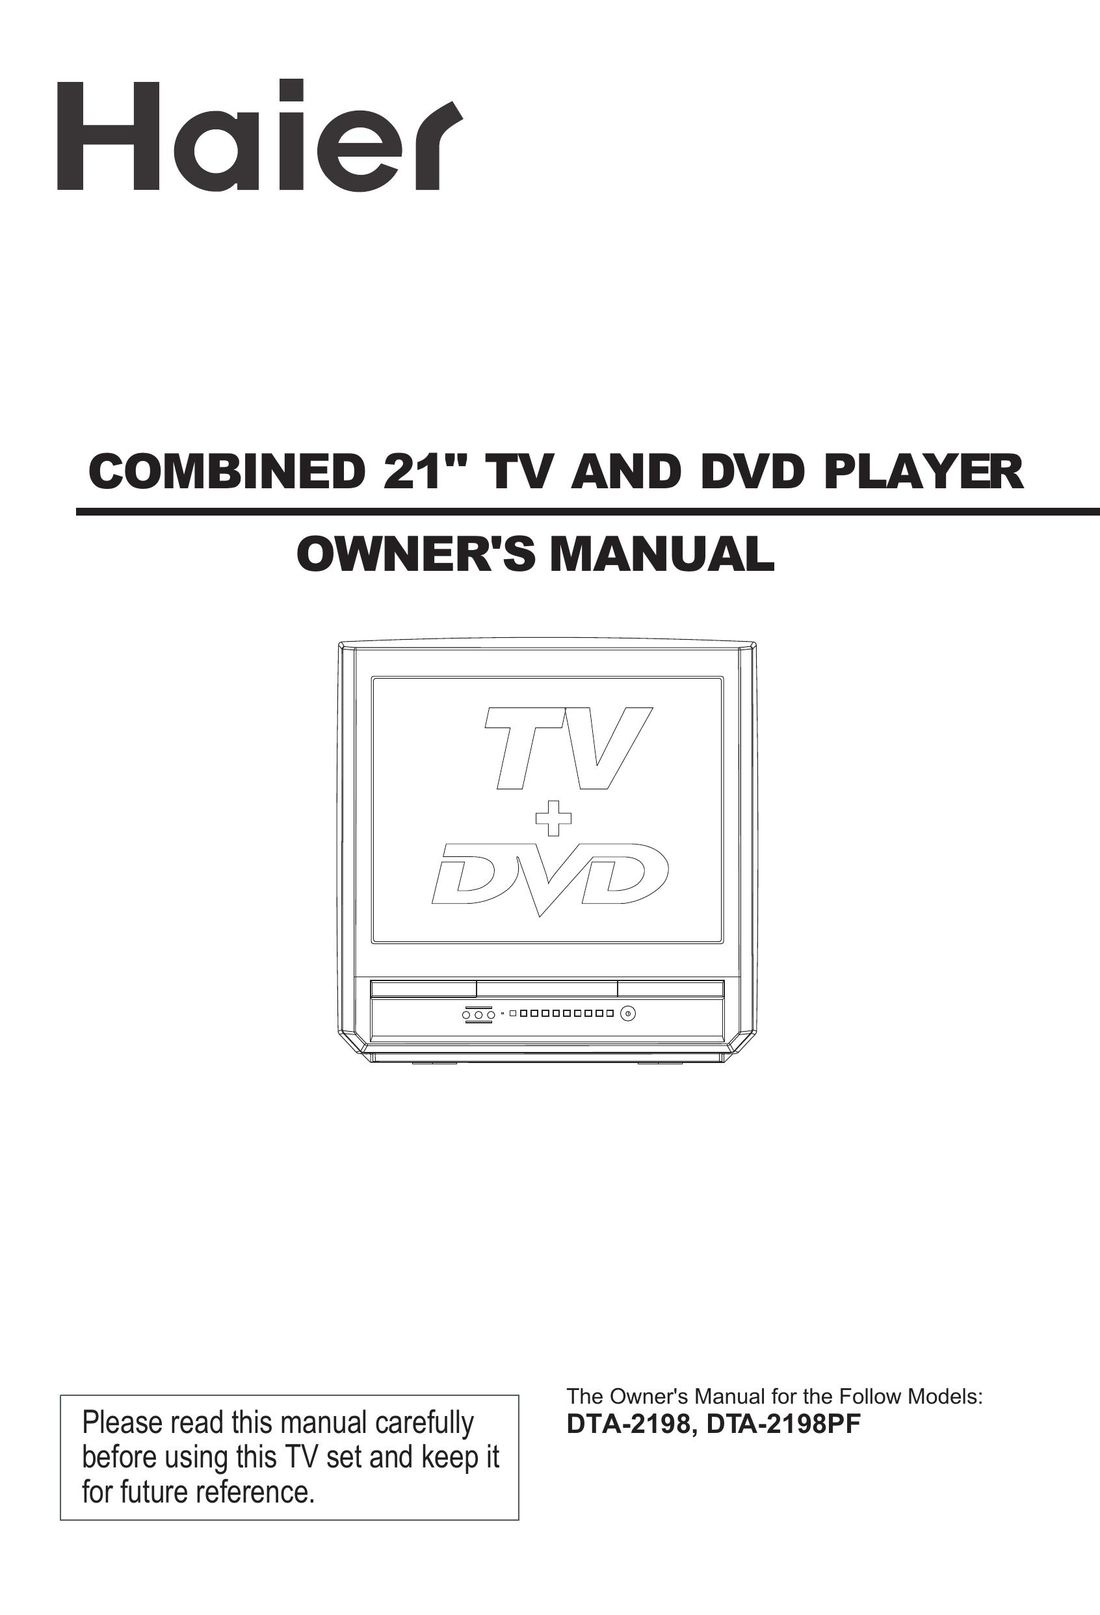 Haier DTA-2198PF DVD Player User Manual